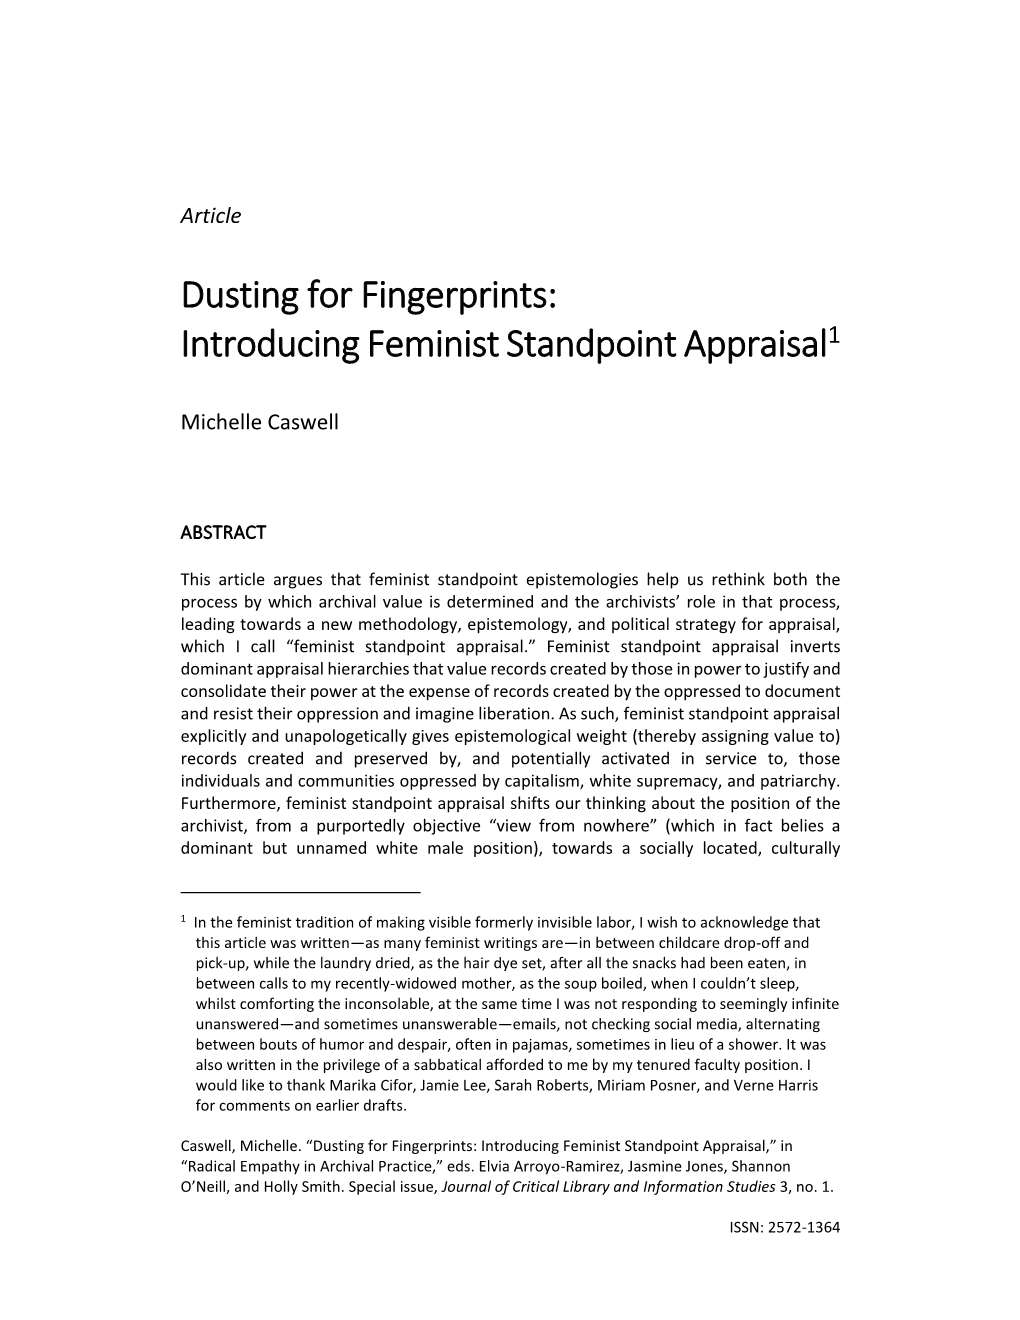 Dusting for Fingerprints: Introducing Feminist Standpoint Appraisal1